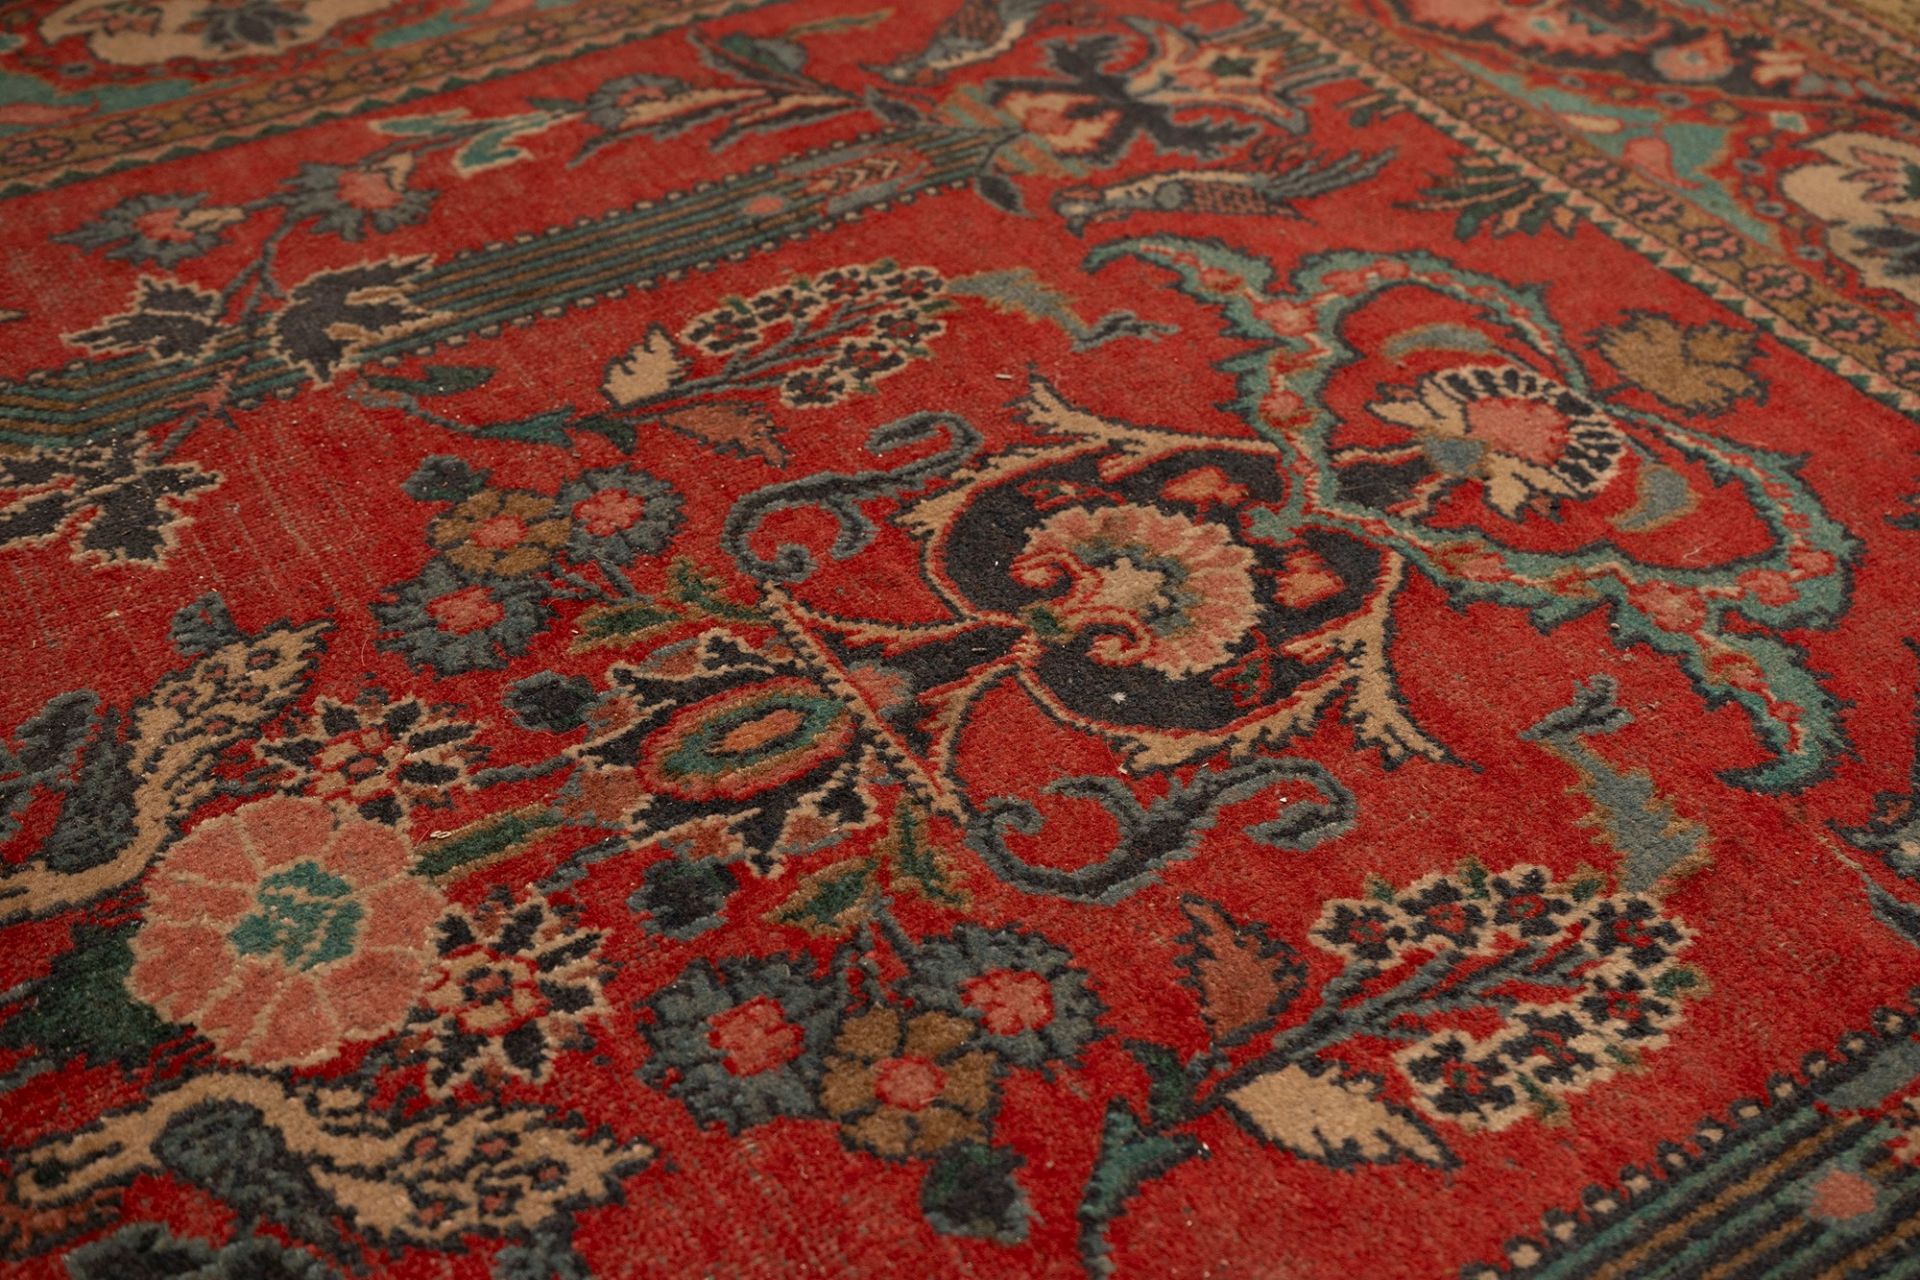 Isfahan Persian prayer rug, 19th-20th centuries - Image 3 of 3